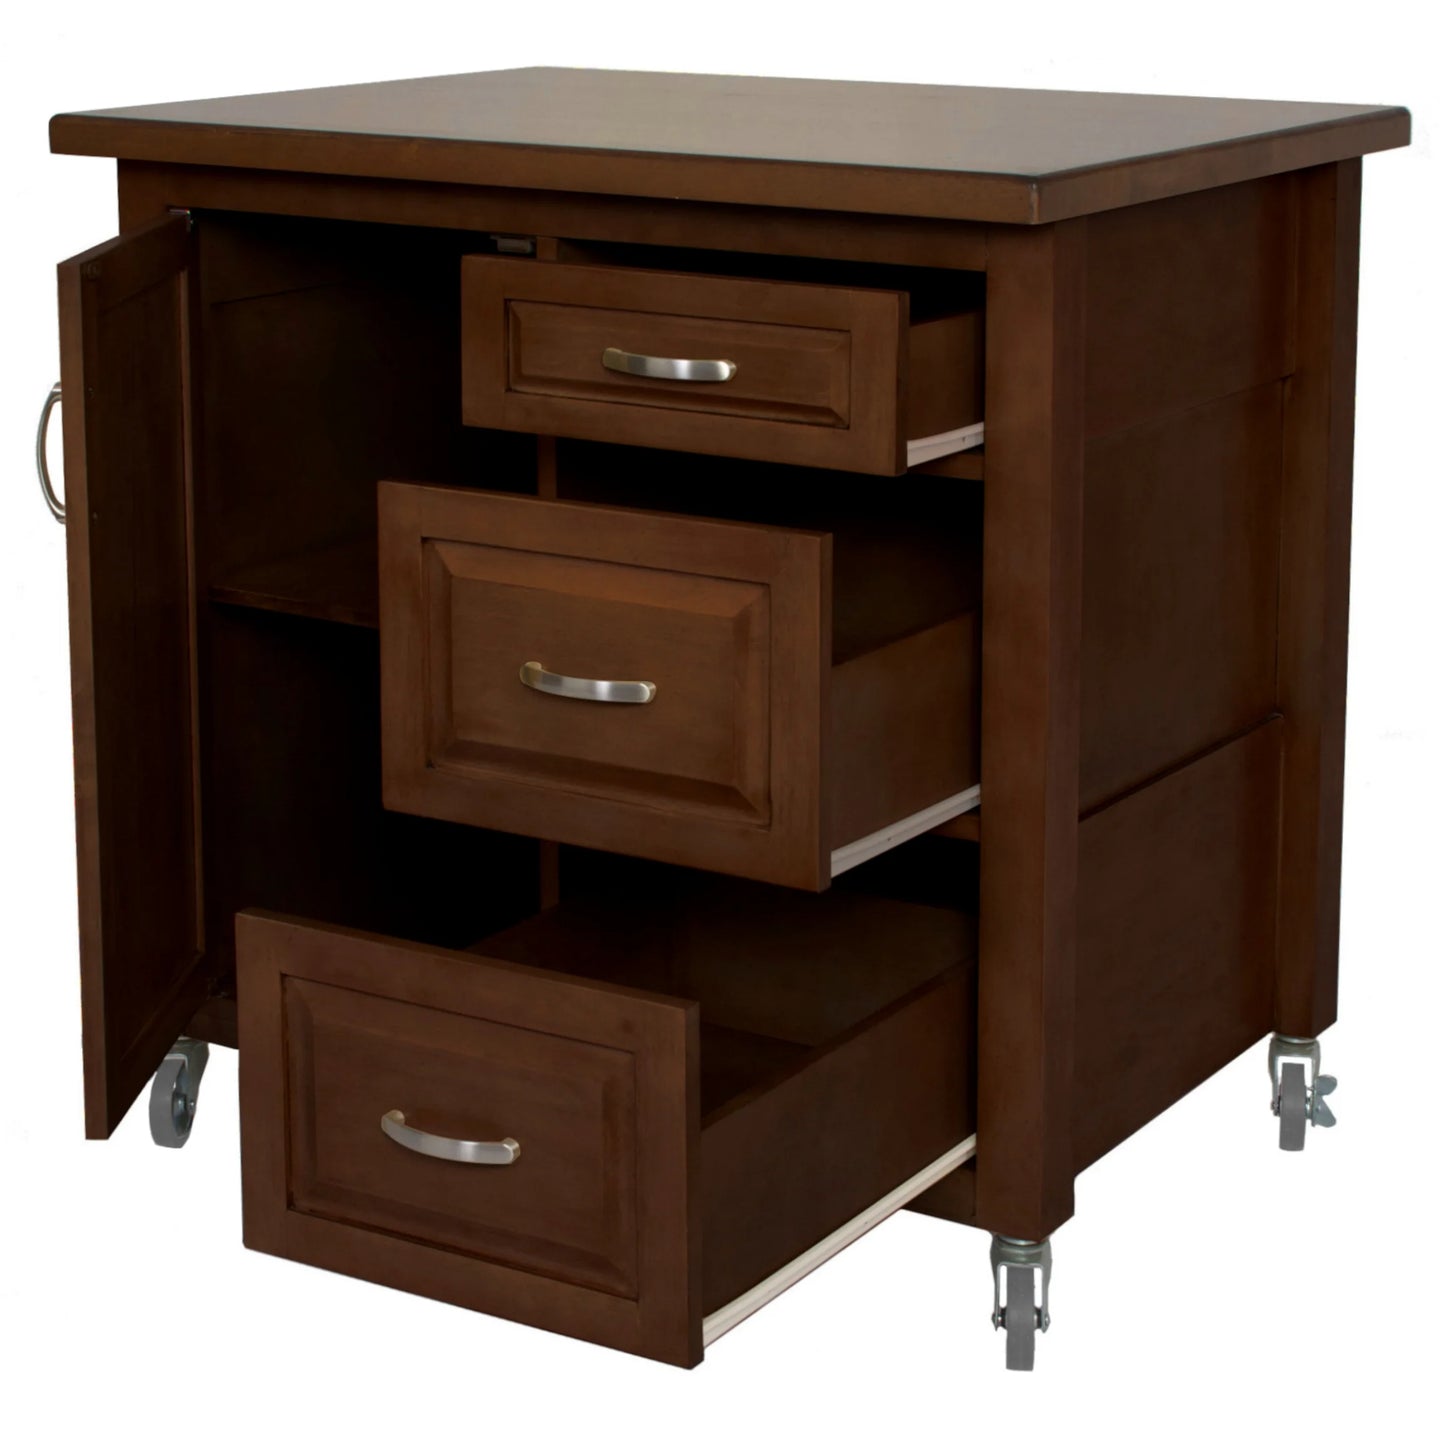 Sunset Trading Andrews Kitchen Cart | Three Drawers | Adjustable Shelf Cabinet | Distressed Chestnut Brown